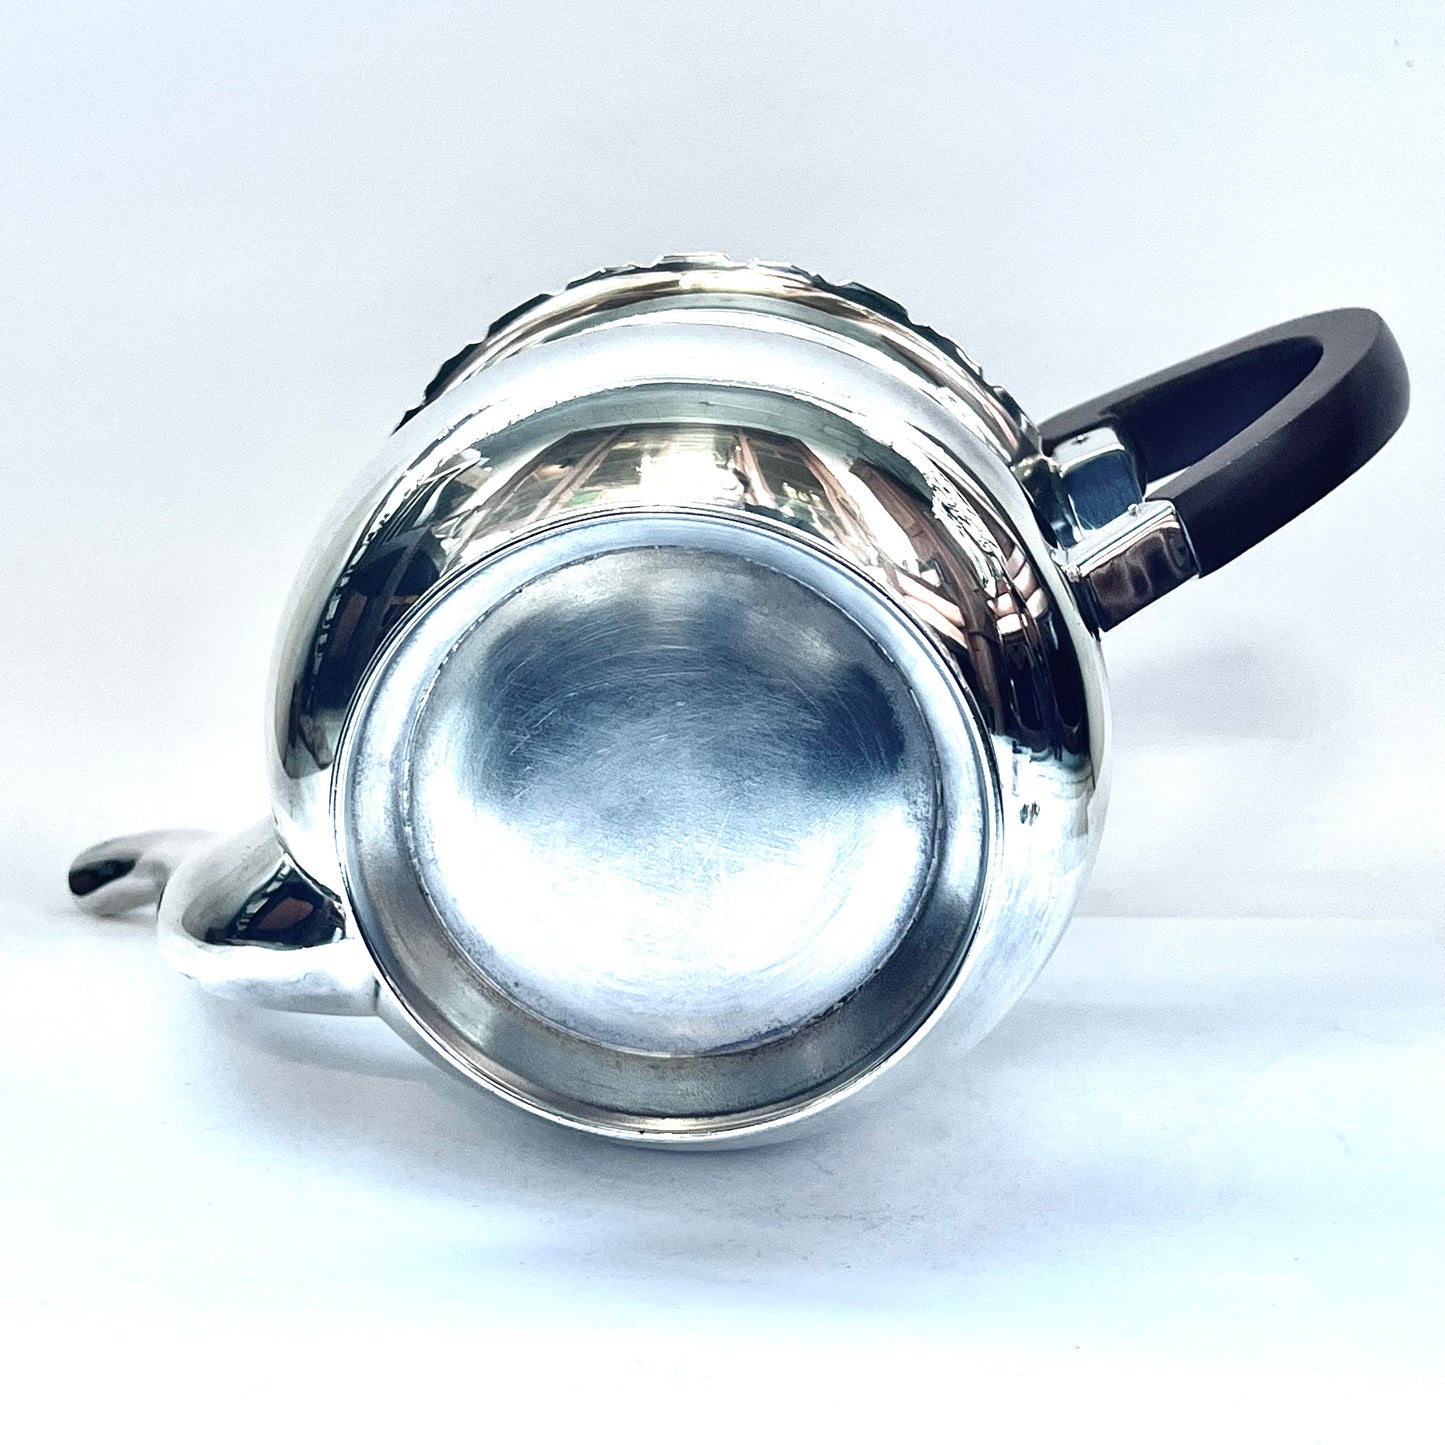 1930s Australian W.J. Sanders sterling silver teapot with Art Deco finial and handles, likely bakelite